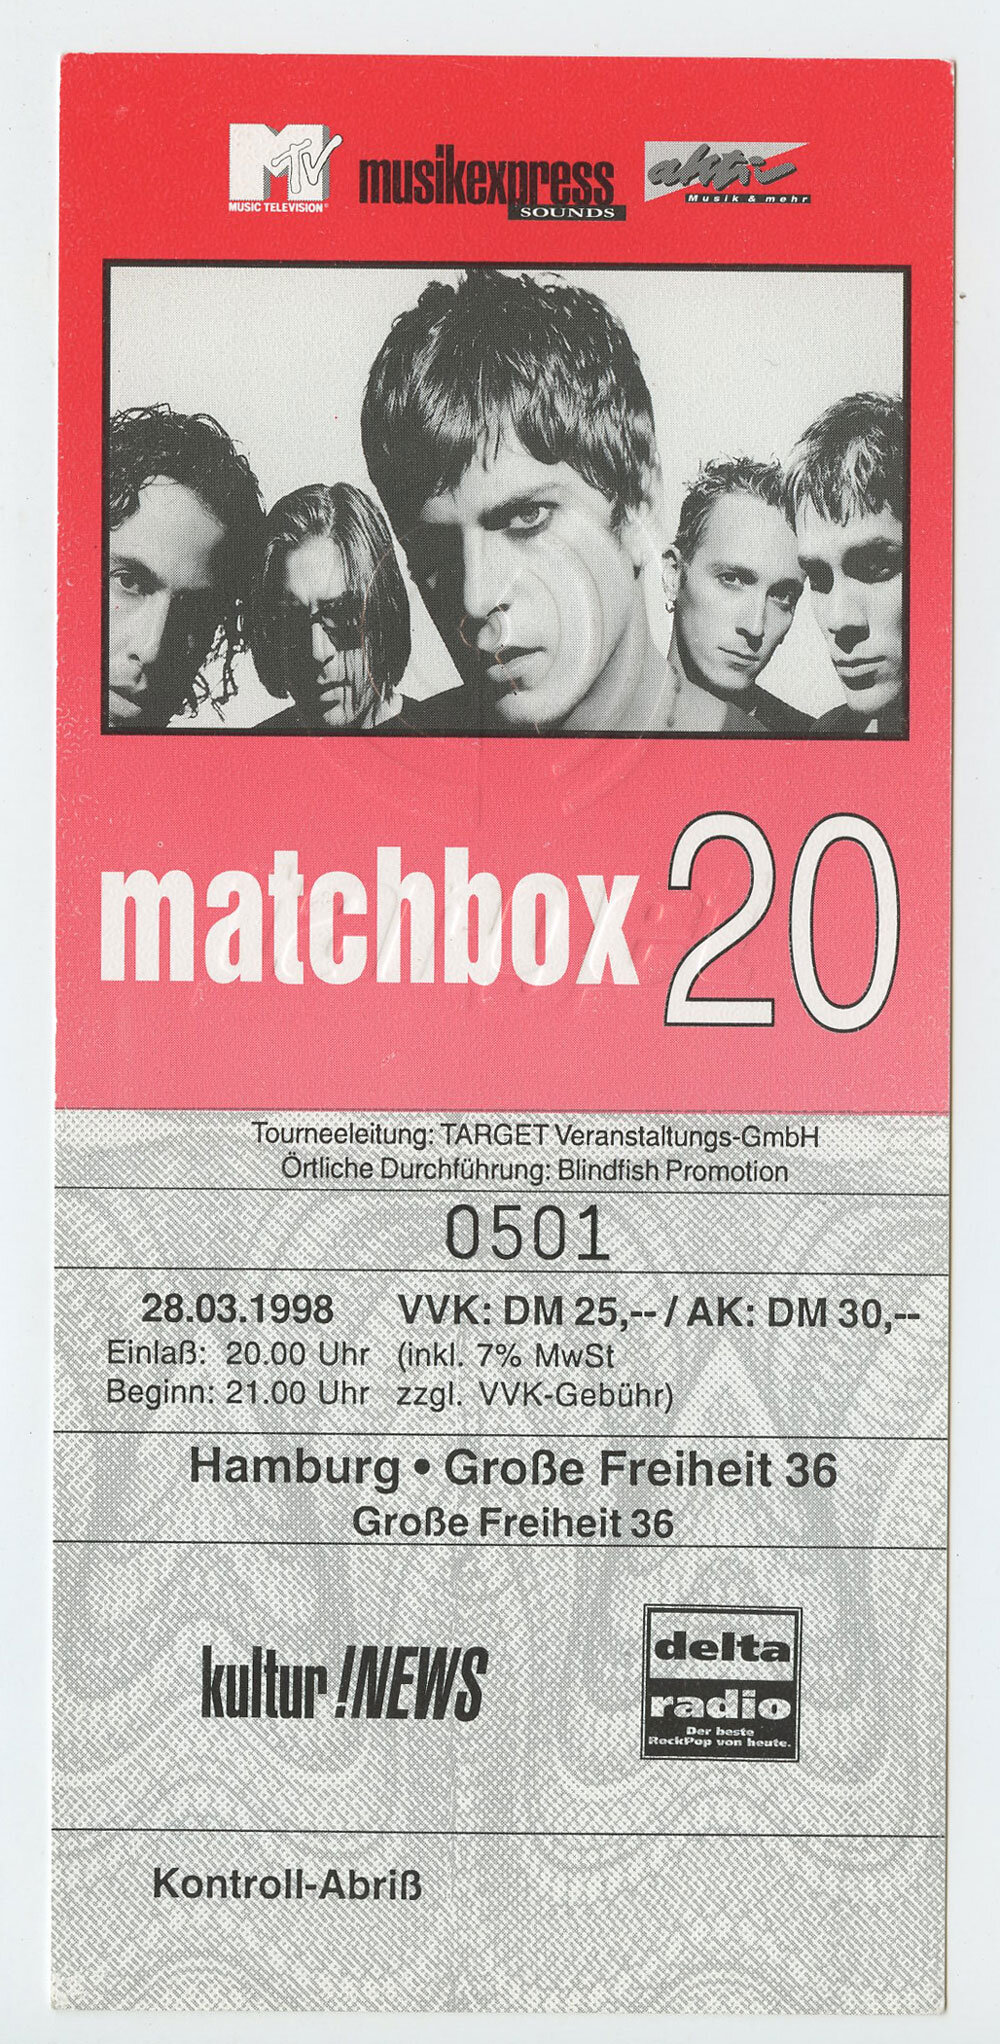 Matchbox 20 Vintage Ticket 1996 Mar 28 Hamburg Germany 